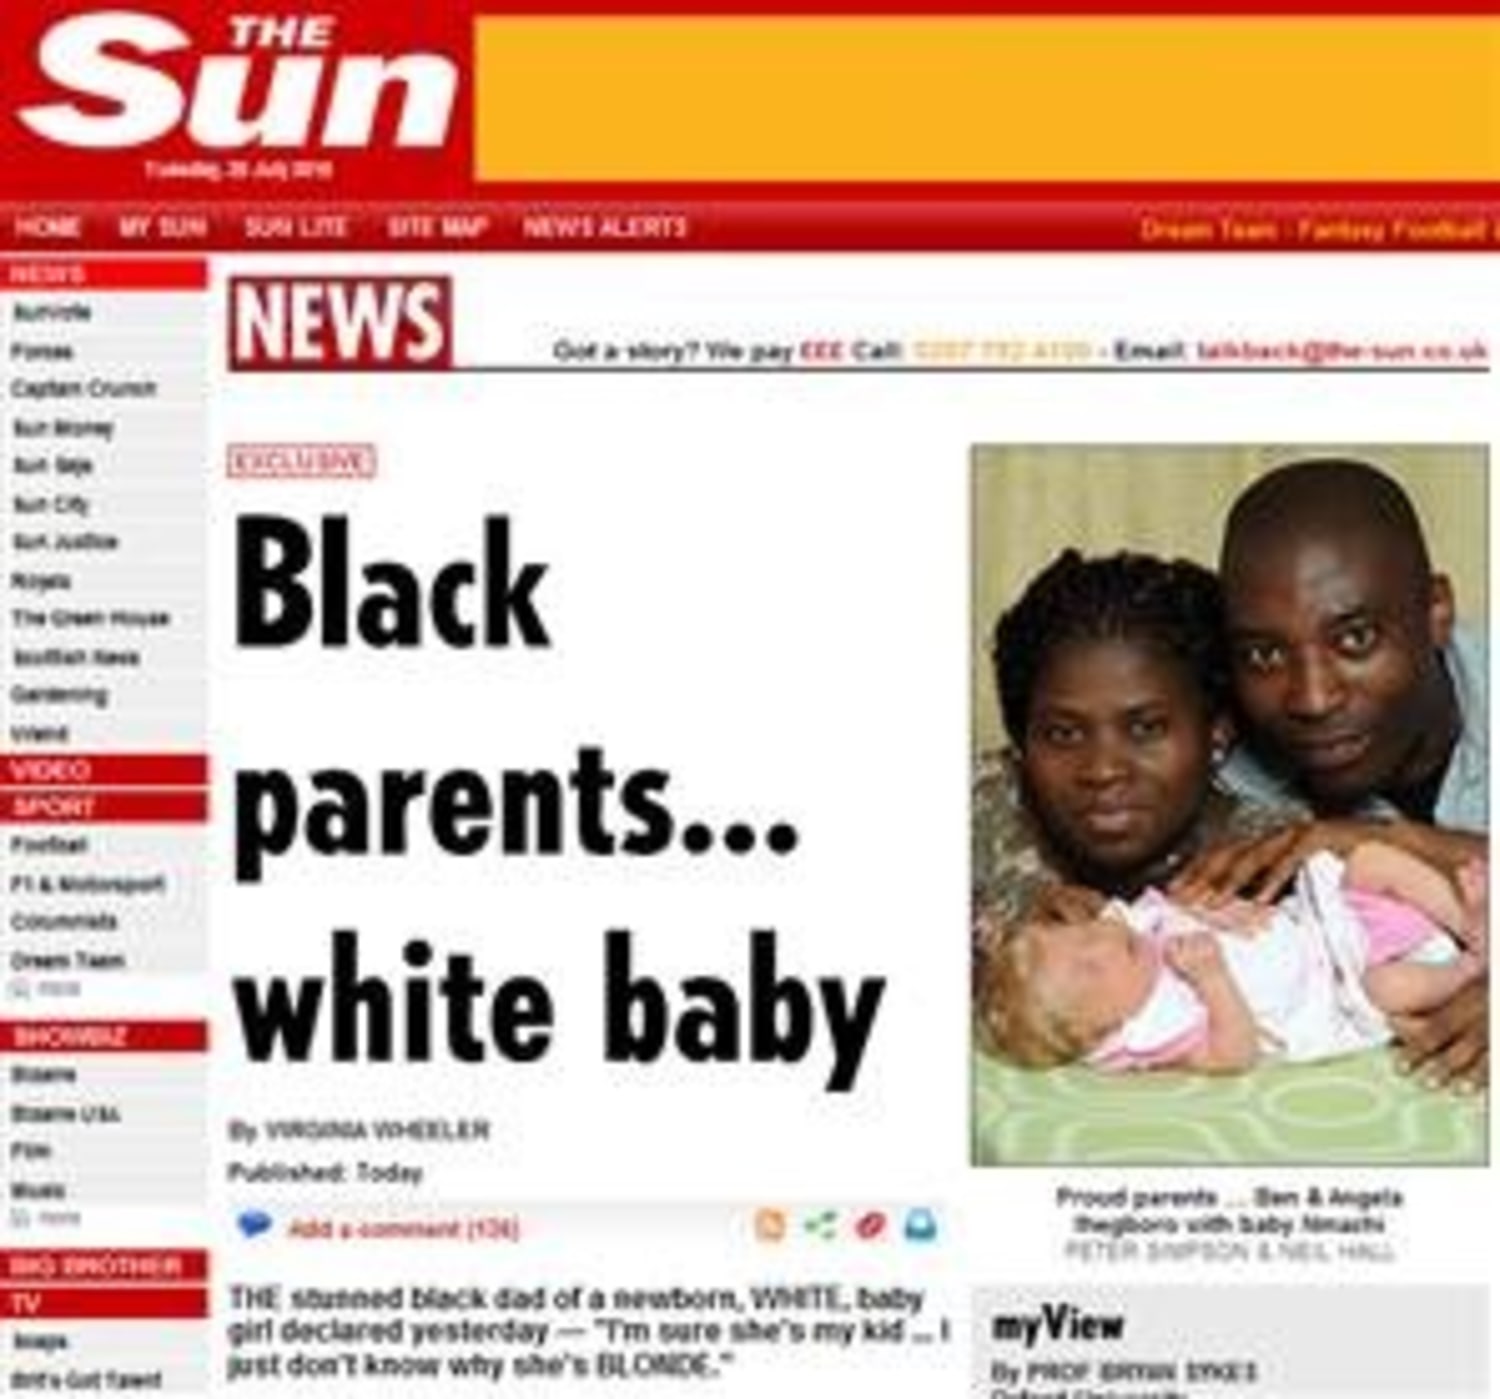 White girls having black babies